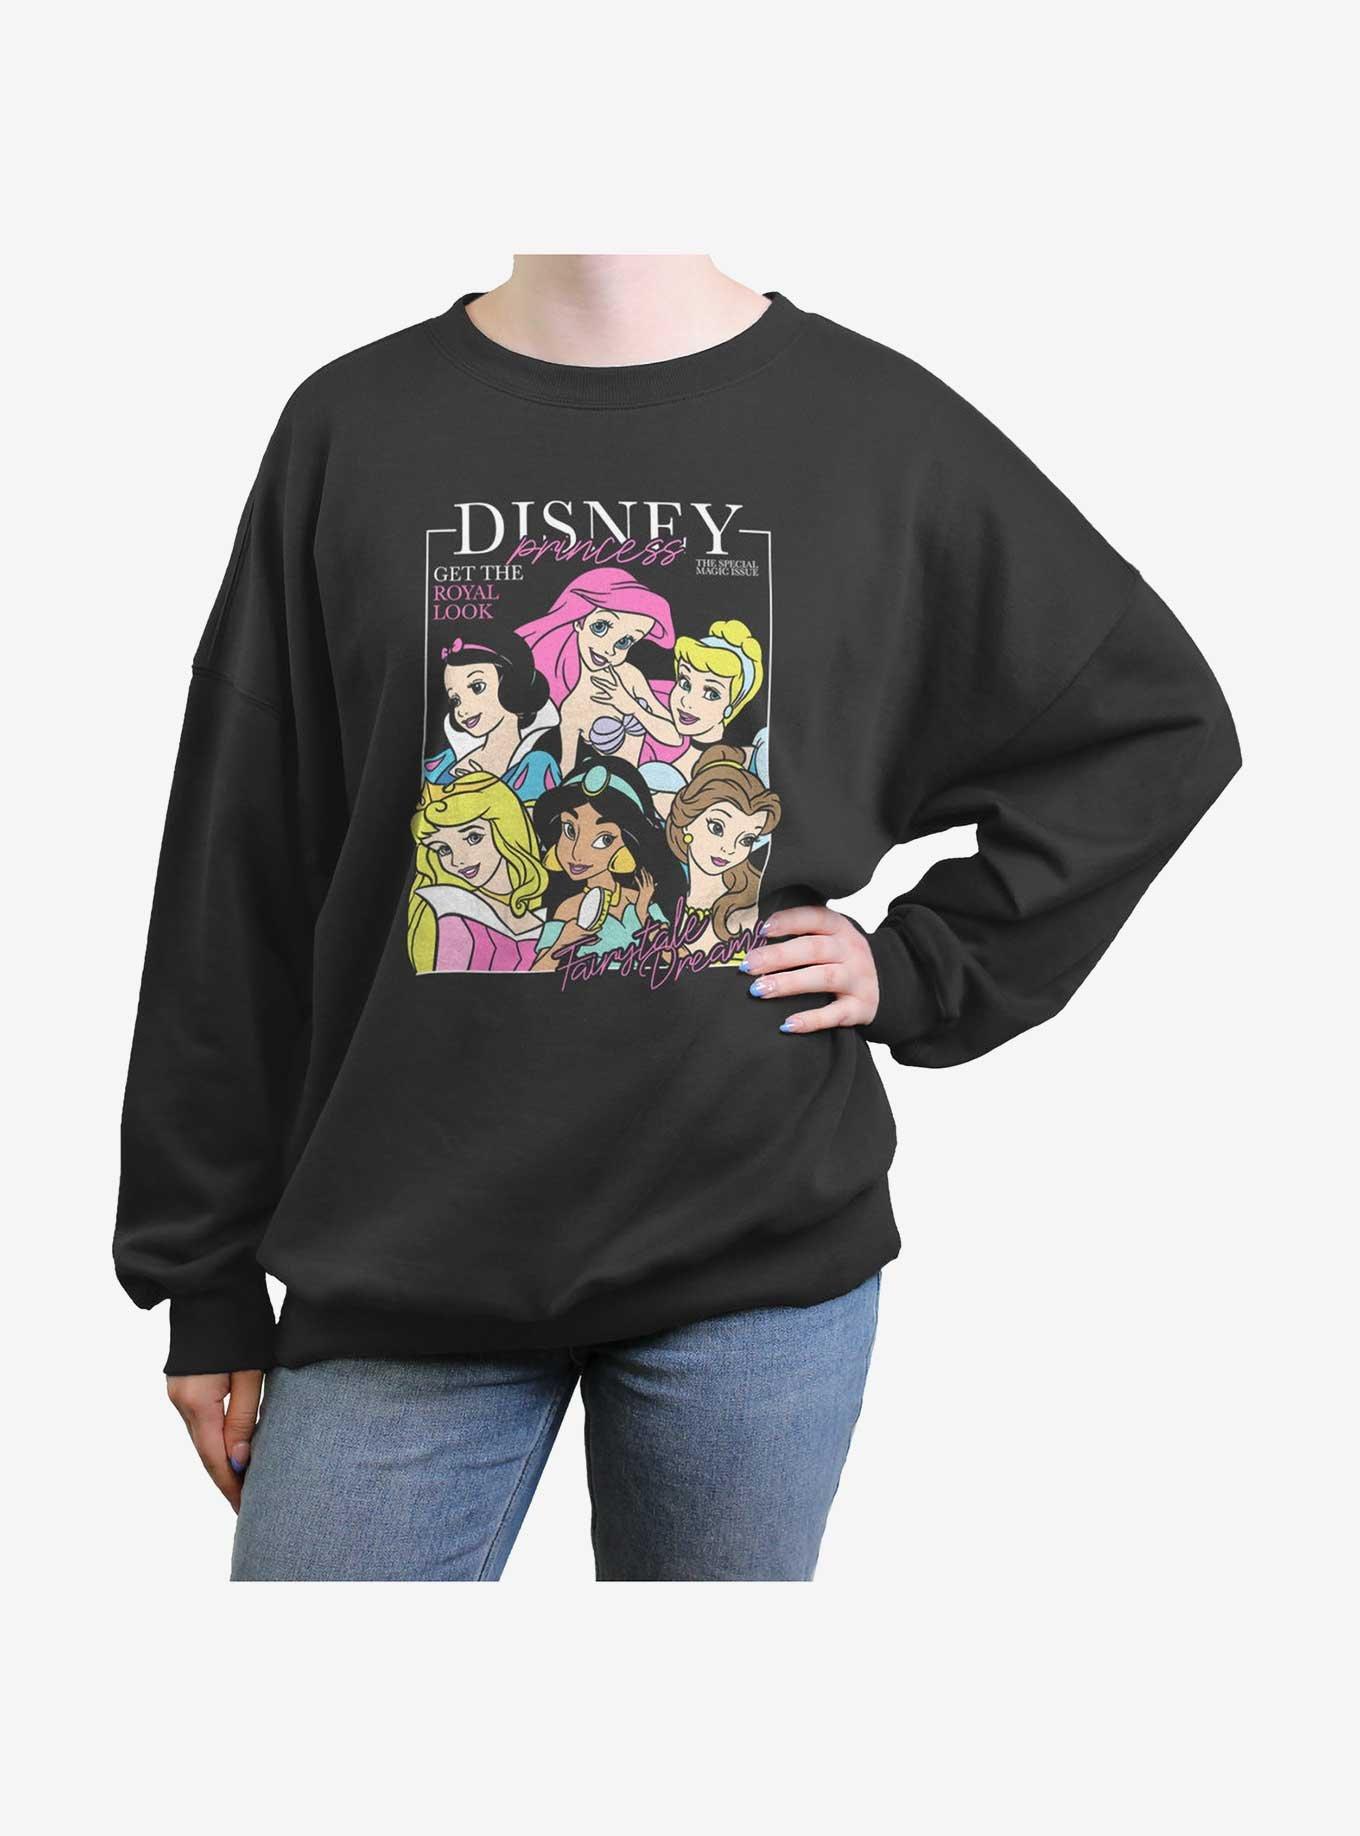 Disney Princesses Royal Look Magazine Cover Girls Oversized Sweatshirt